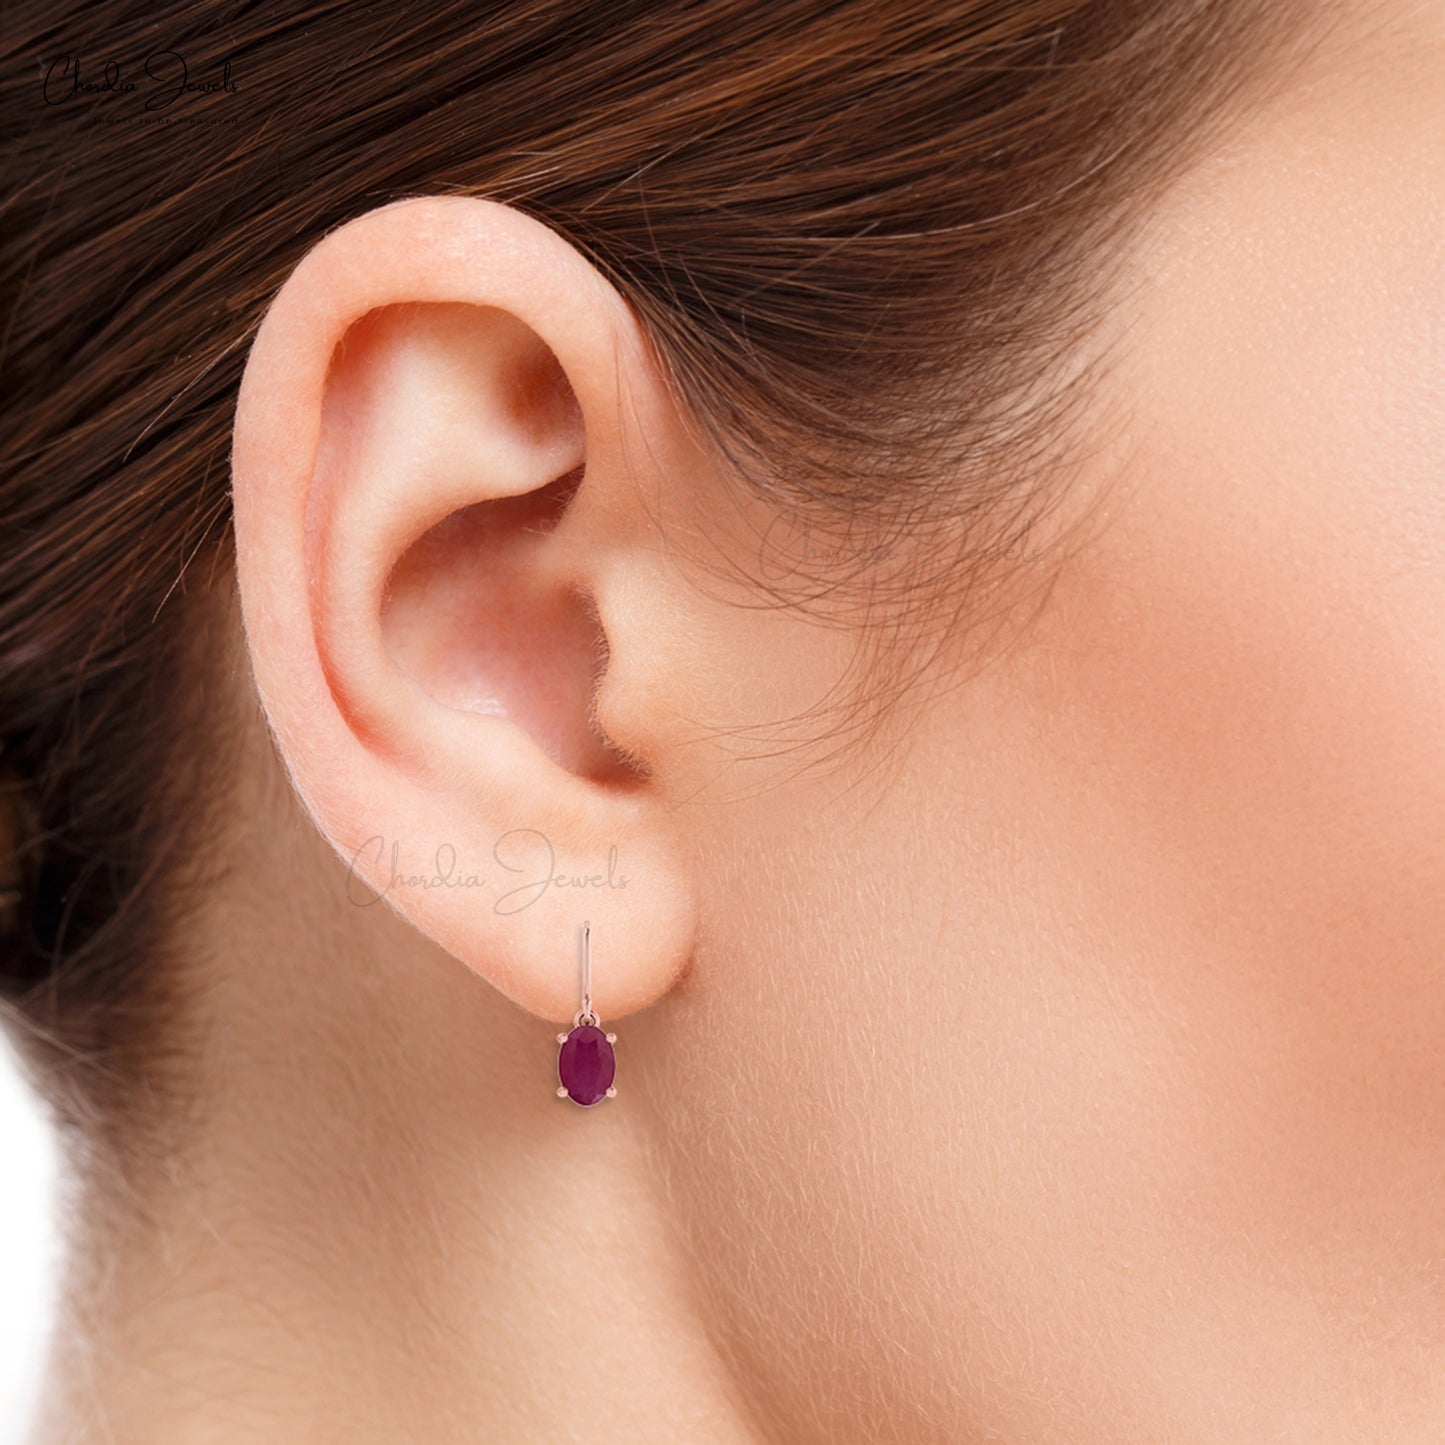 14k Solid Gold Dangle Earrings with Ruby Gemstone 1.44ct Oval Gemstone Dainty Earrings